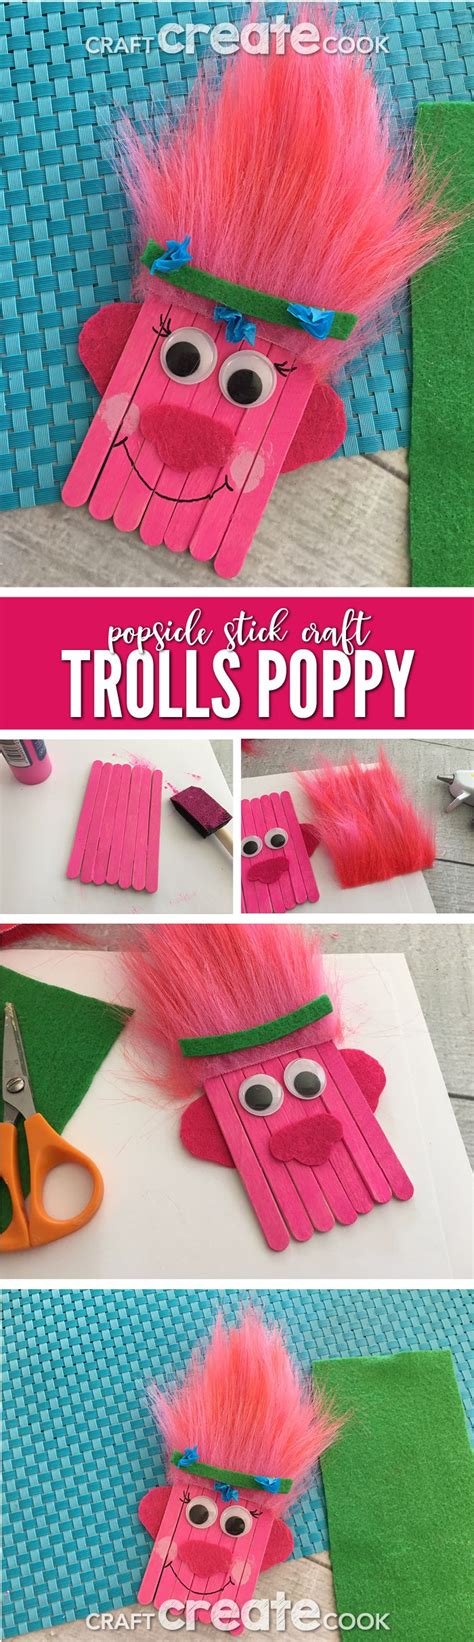 Trolls Poppy Popsicle Stick Craft For Kids Activité Manuelle Enfant